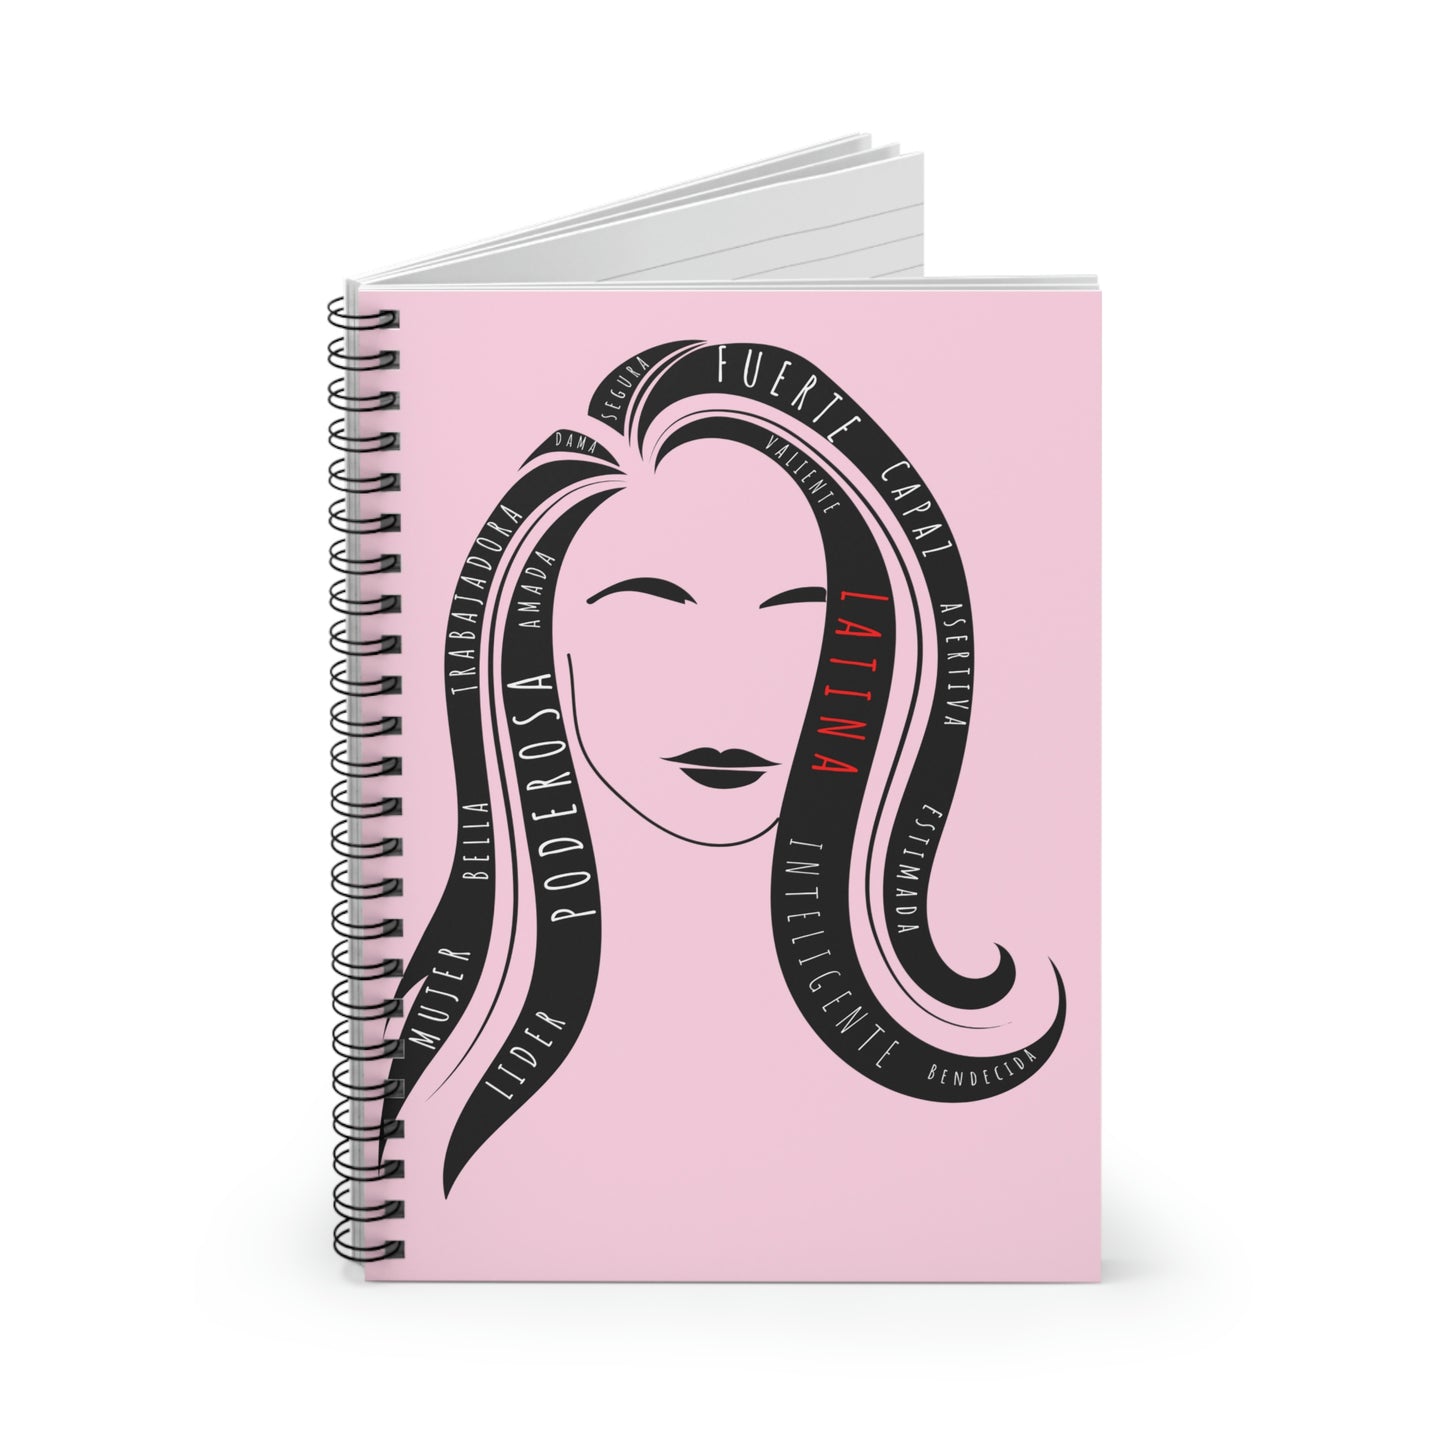 Fuerza Latina Pink Spiral Notebook - Ruled Line